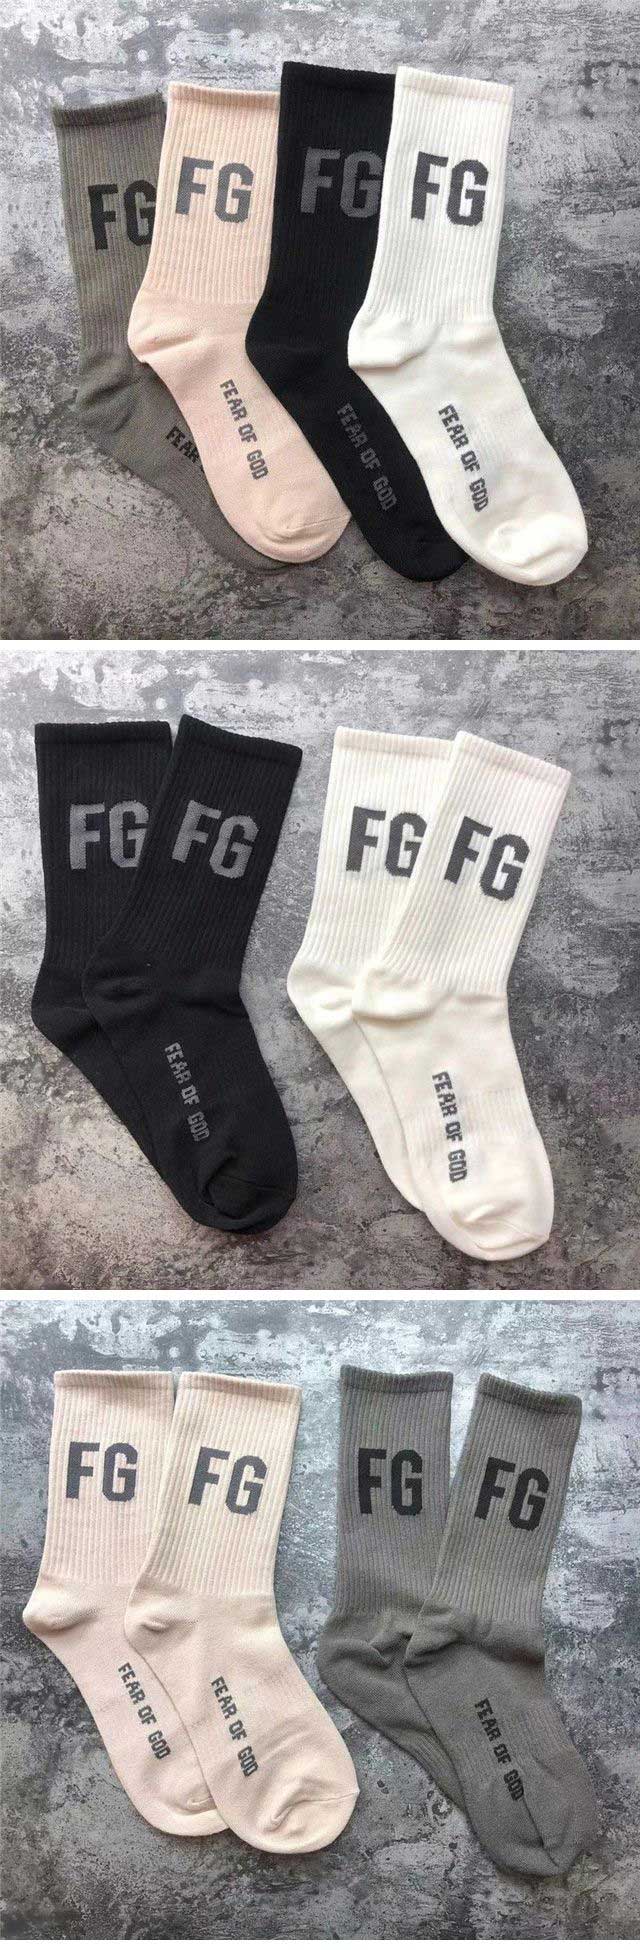 Fear of God Essentials FG Socks FOG フィアオブゴッド エッセンシャルズ FG ソックス